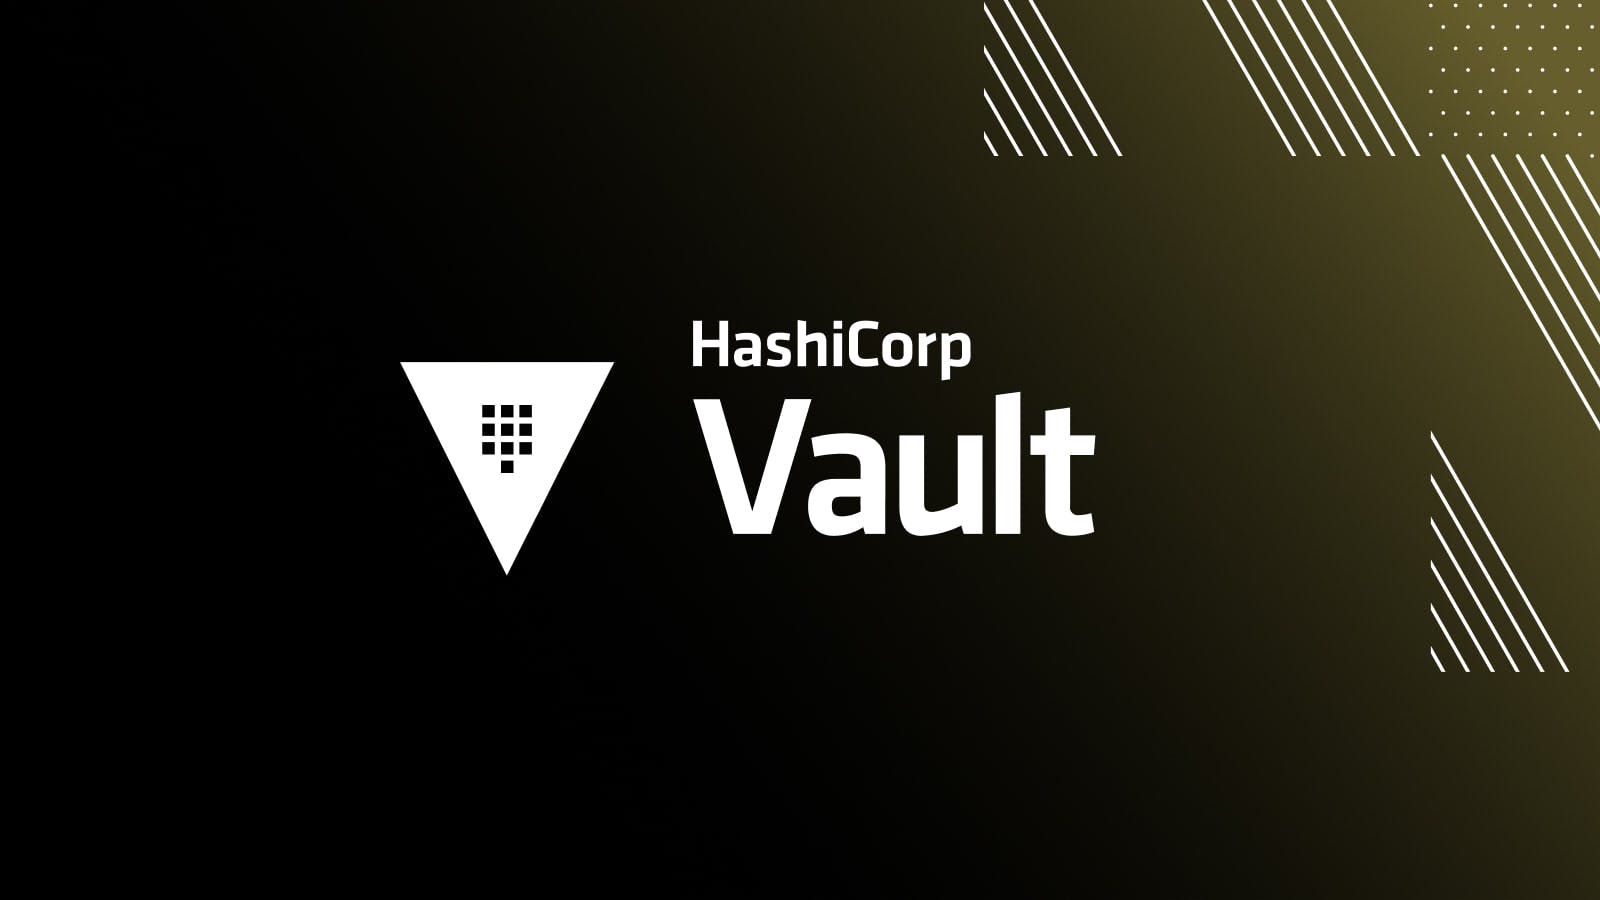 Vault 1.15 brings UI updates, PKI enhancements, new betas, and more